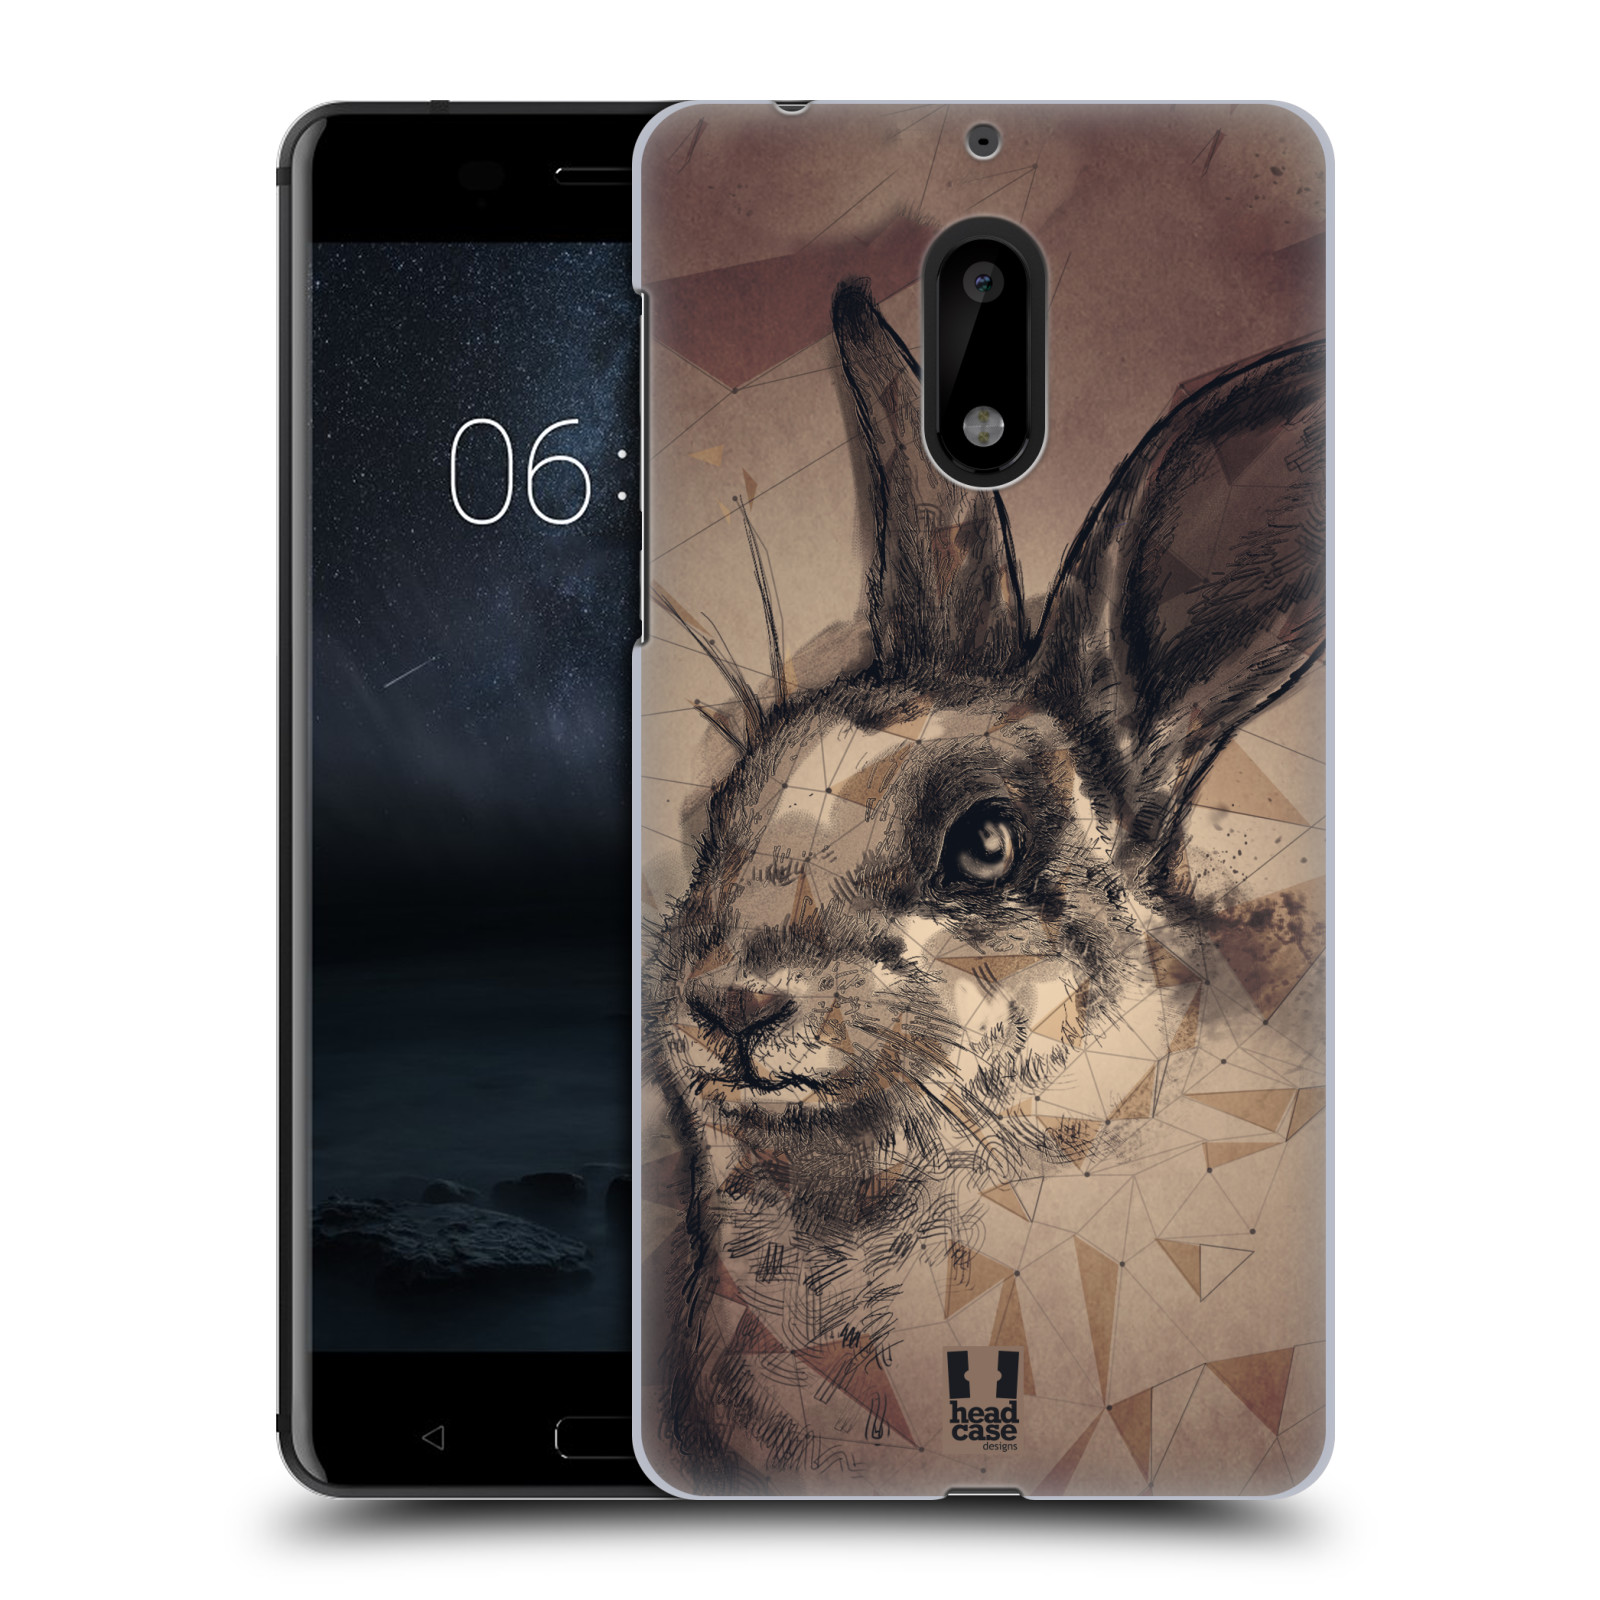 HEAD CASE plastový obal na mobil Nokia 6 vzor Skica zvíře kreslené zajíc